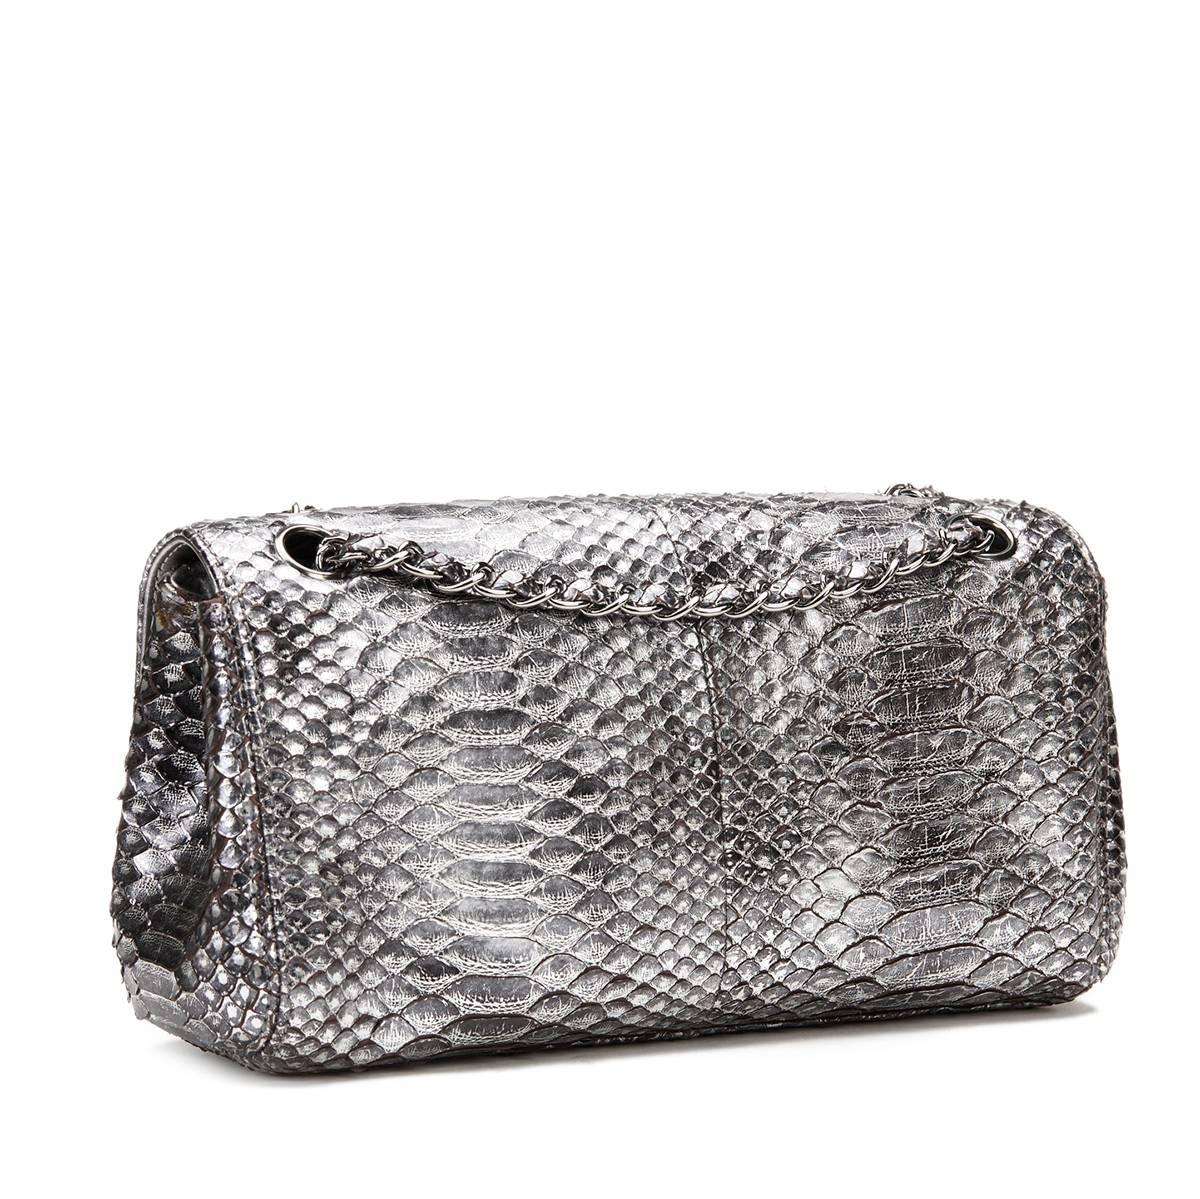 2000s Chanel Metallic Silver Python Classic Single Flap Bag 1